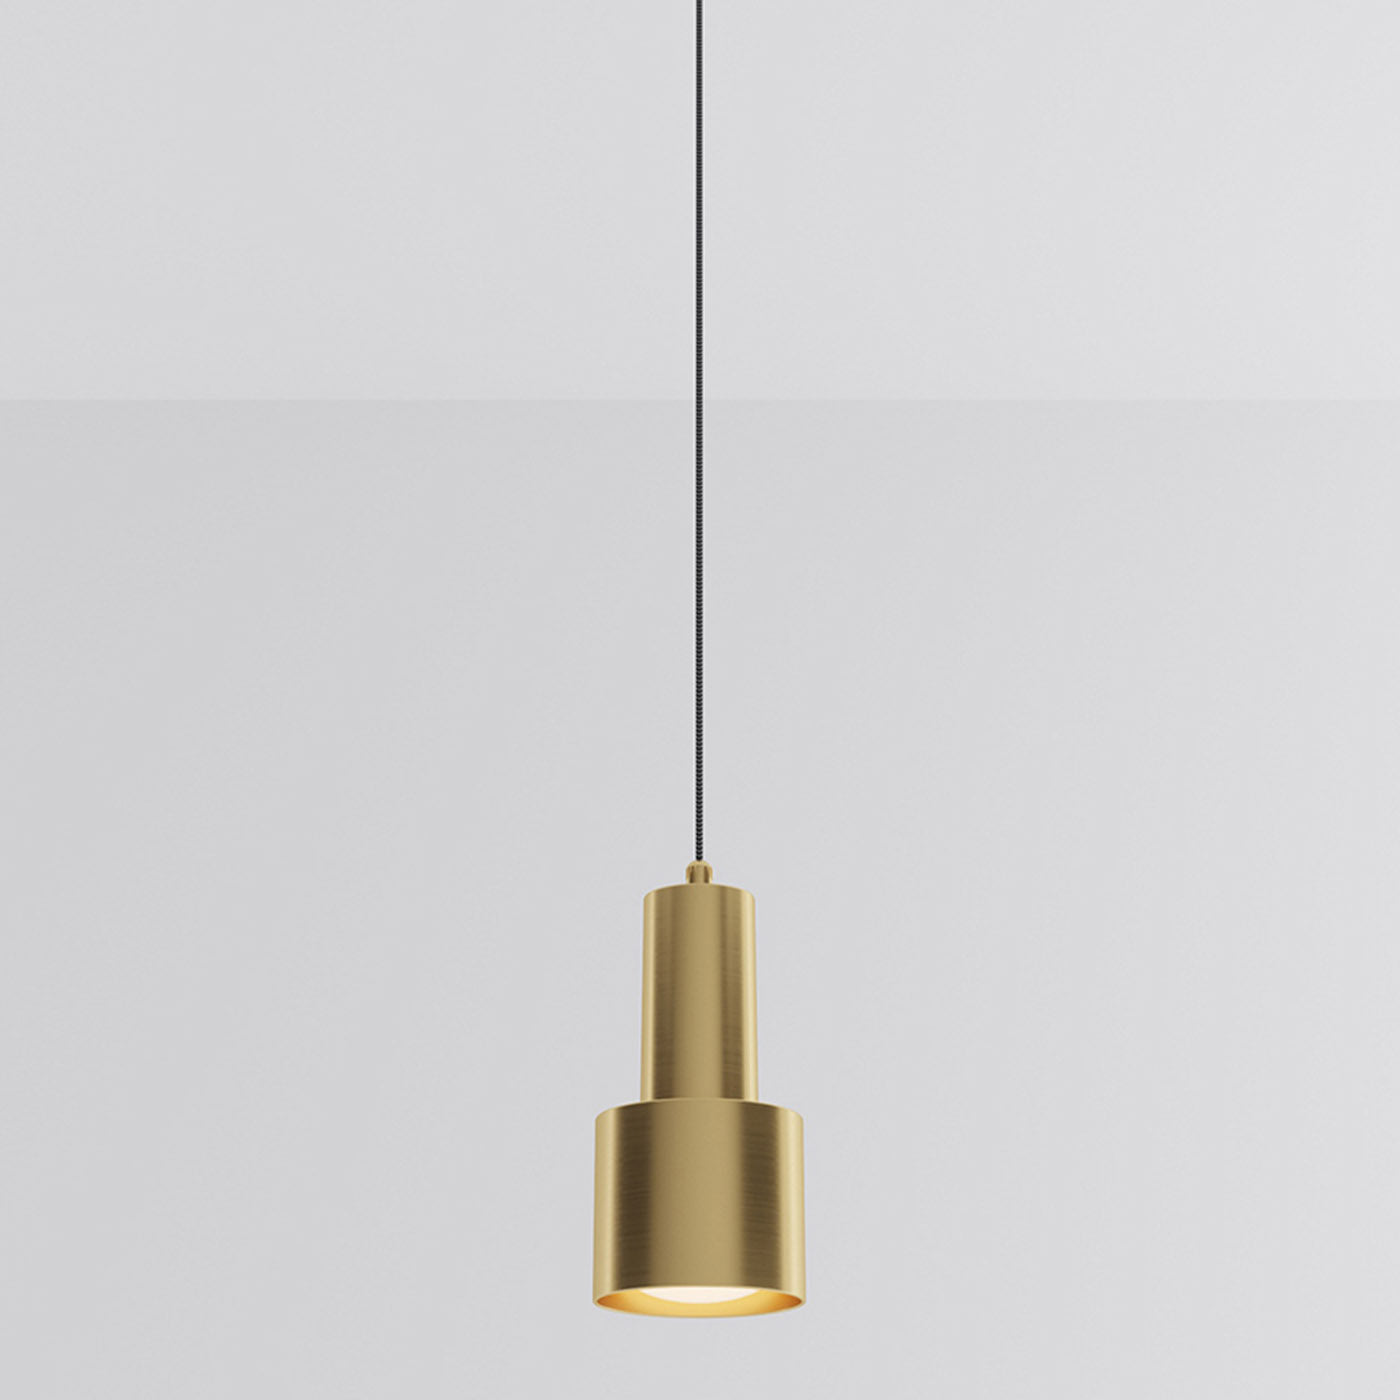 Light Gallery Luxury GP Bronzed Pendant Lamp by Marco Pollice - Alternative view 1